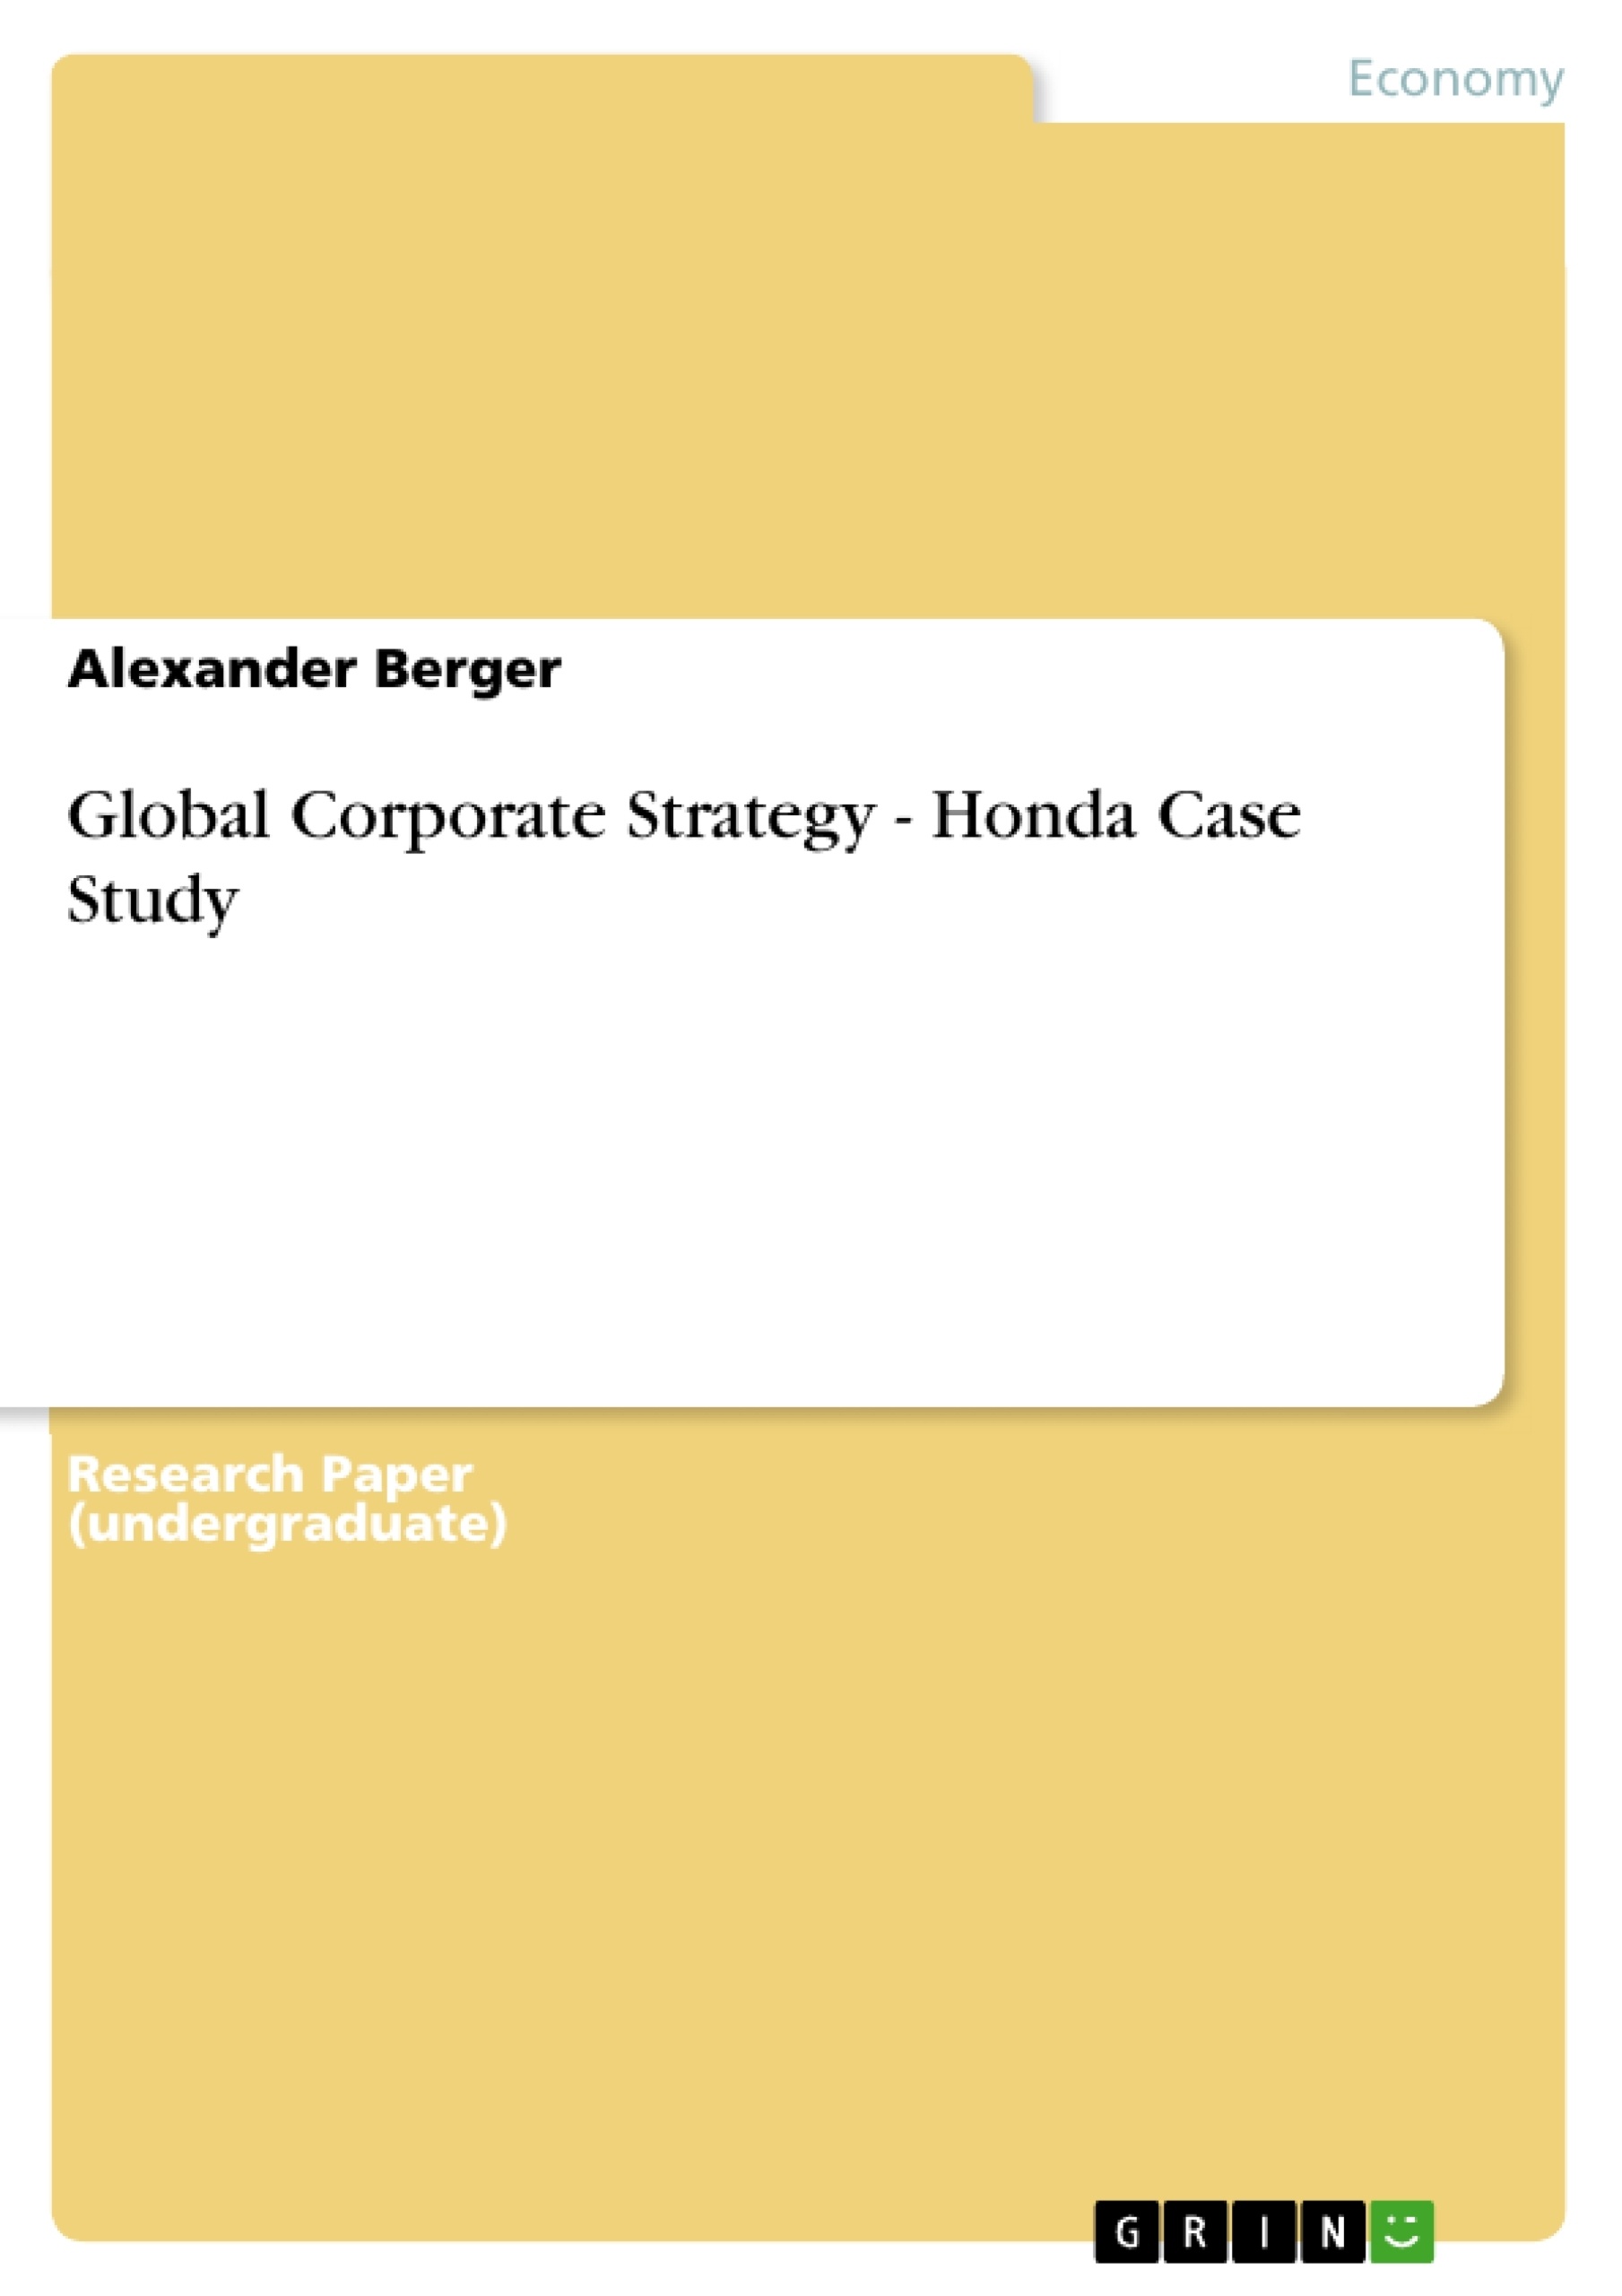 Toyota motor company strategic plan essay